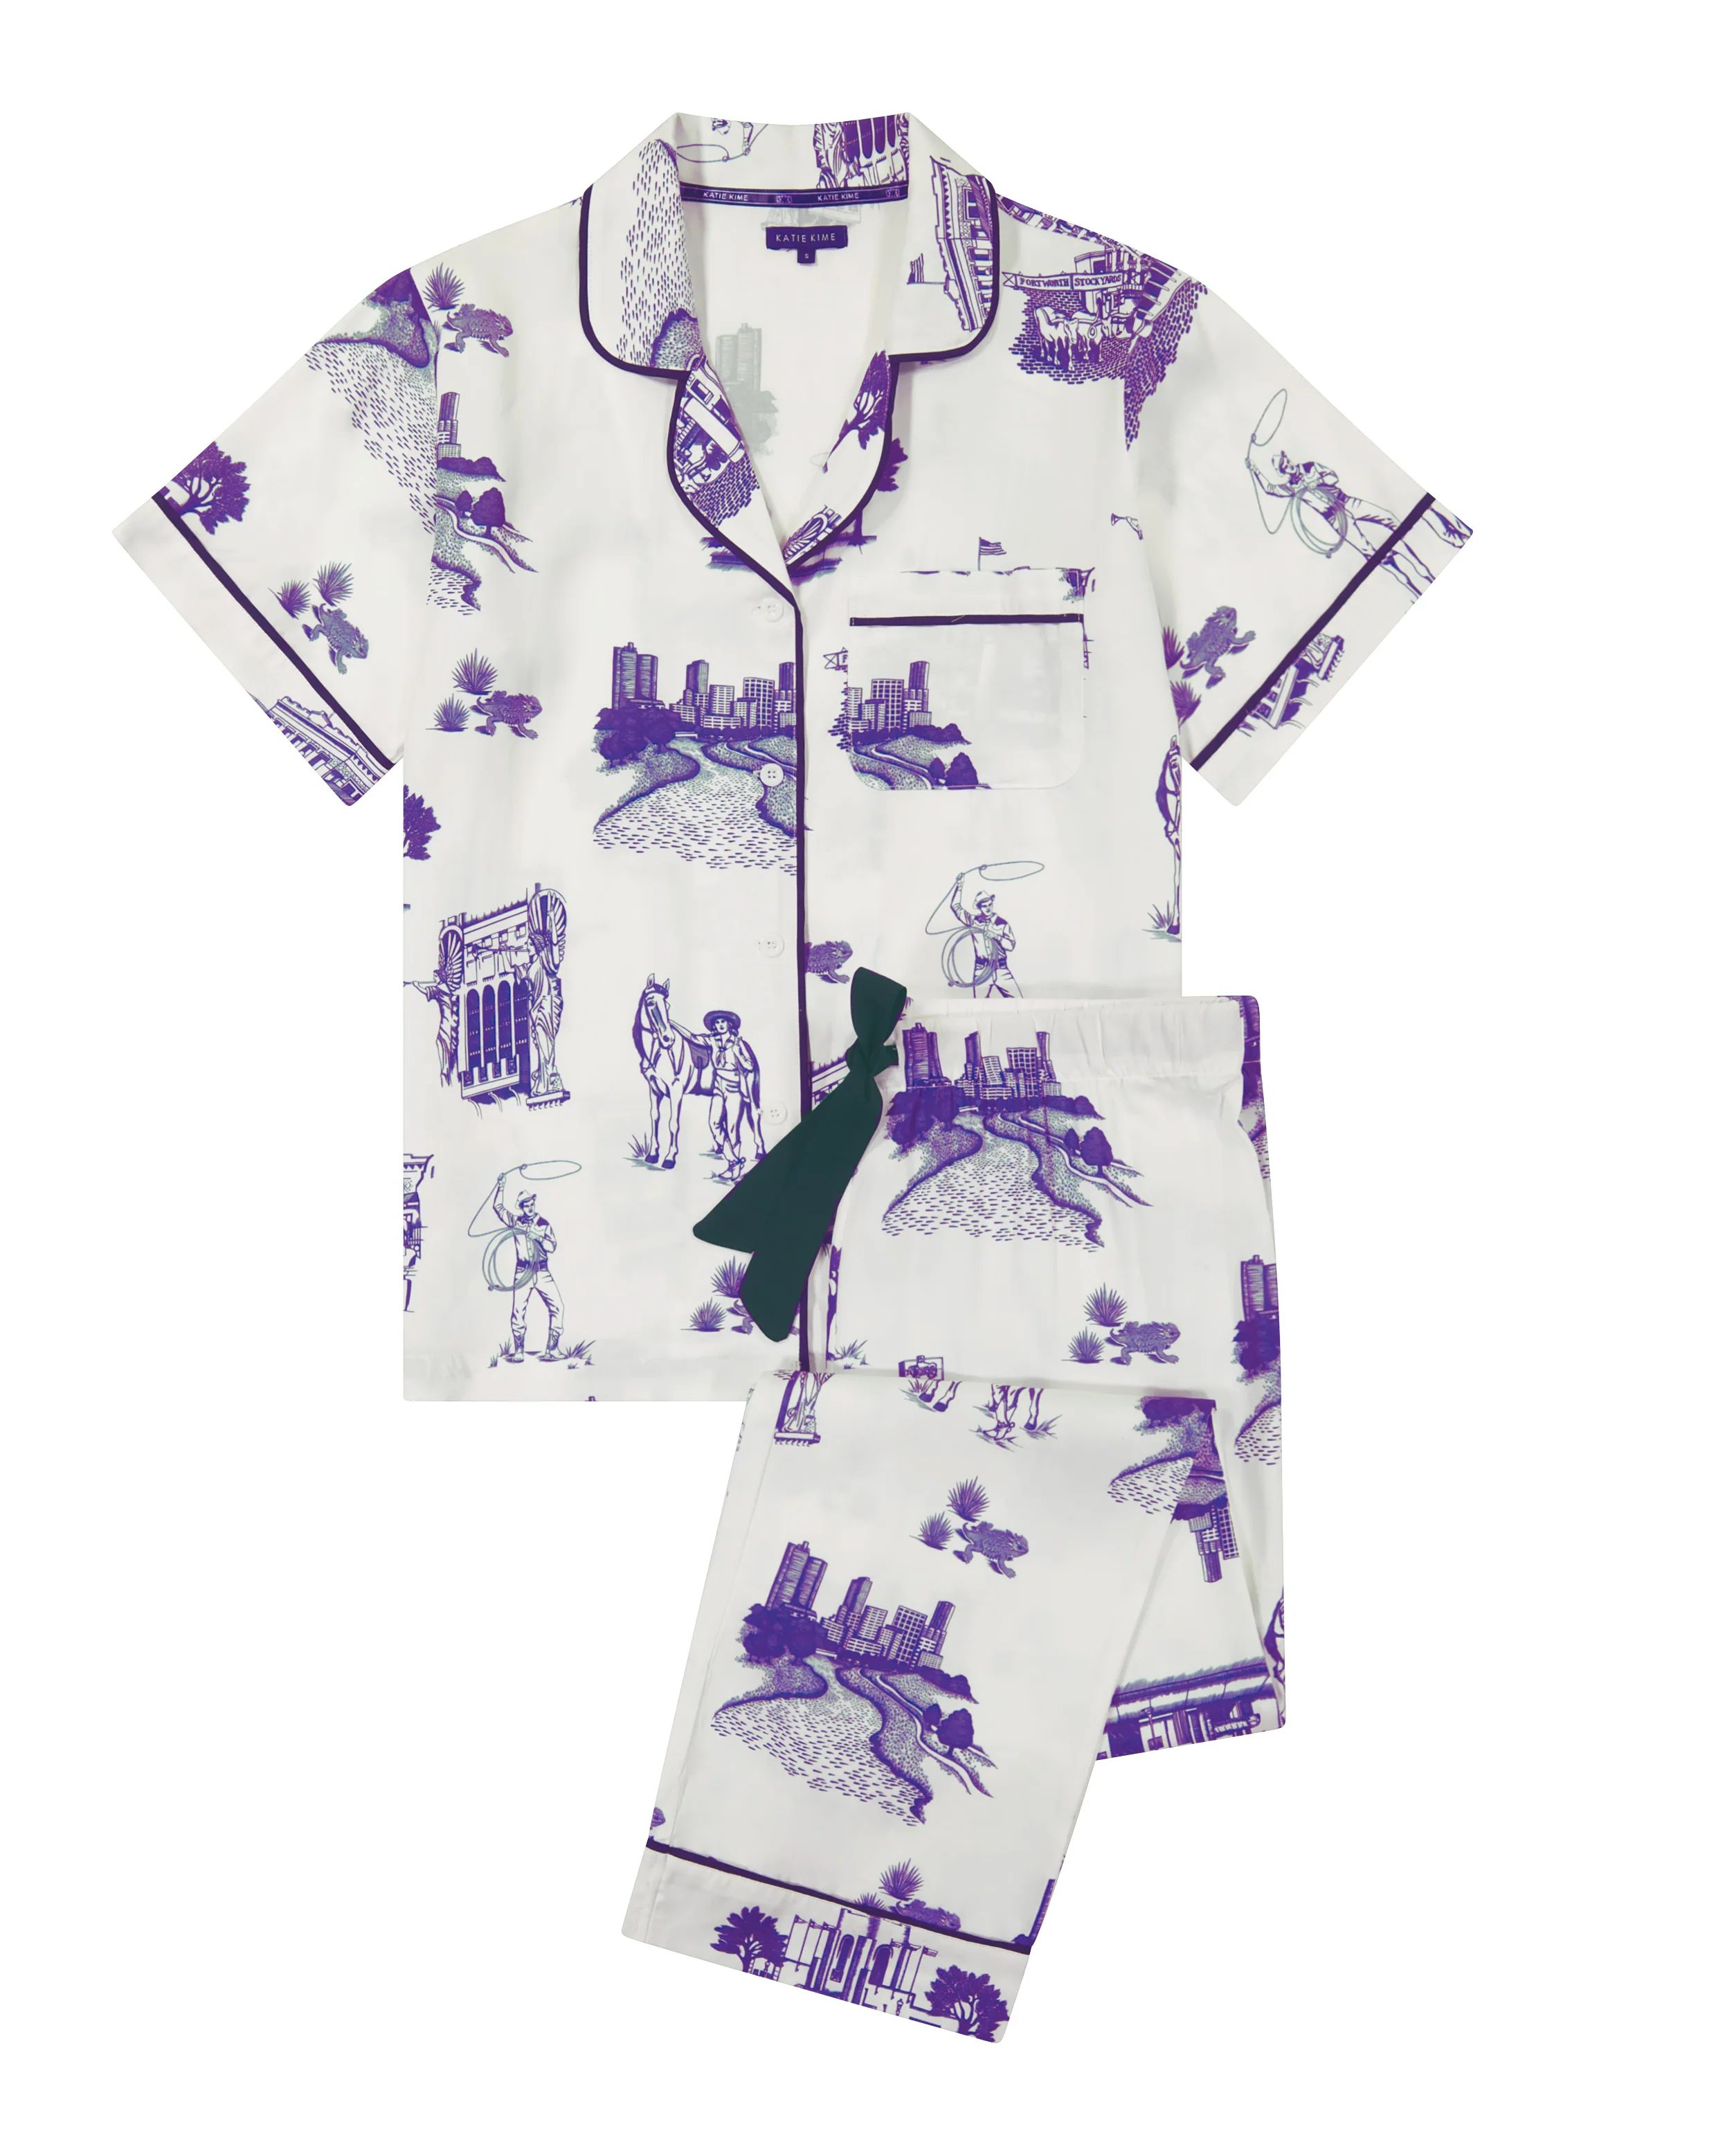 Fort Worth Toile Pajama Pants Set | Colorful Prints, Wallpaper, Pajamas, Home Decor, & More | Katie Kime Inc